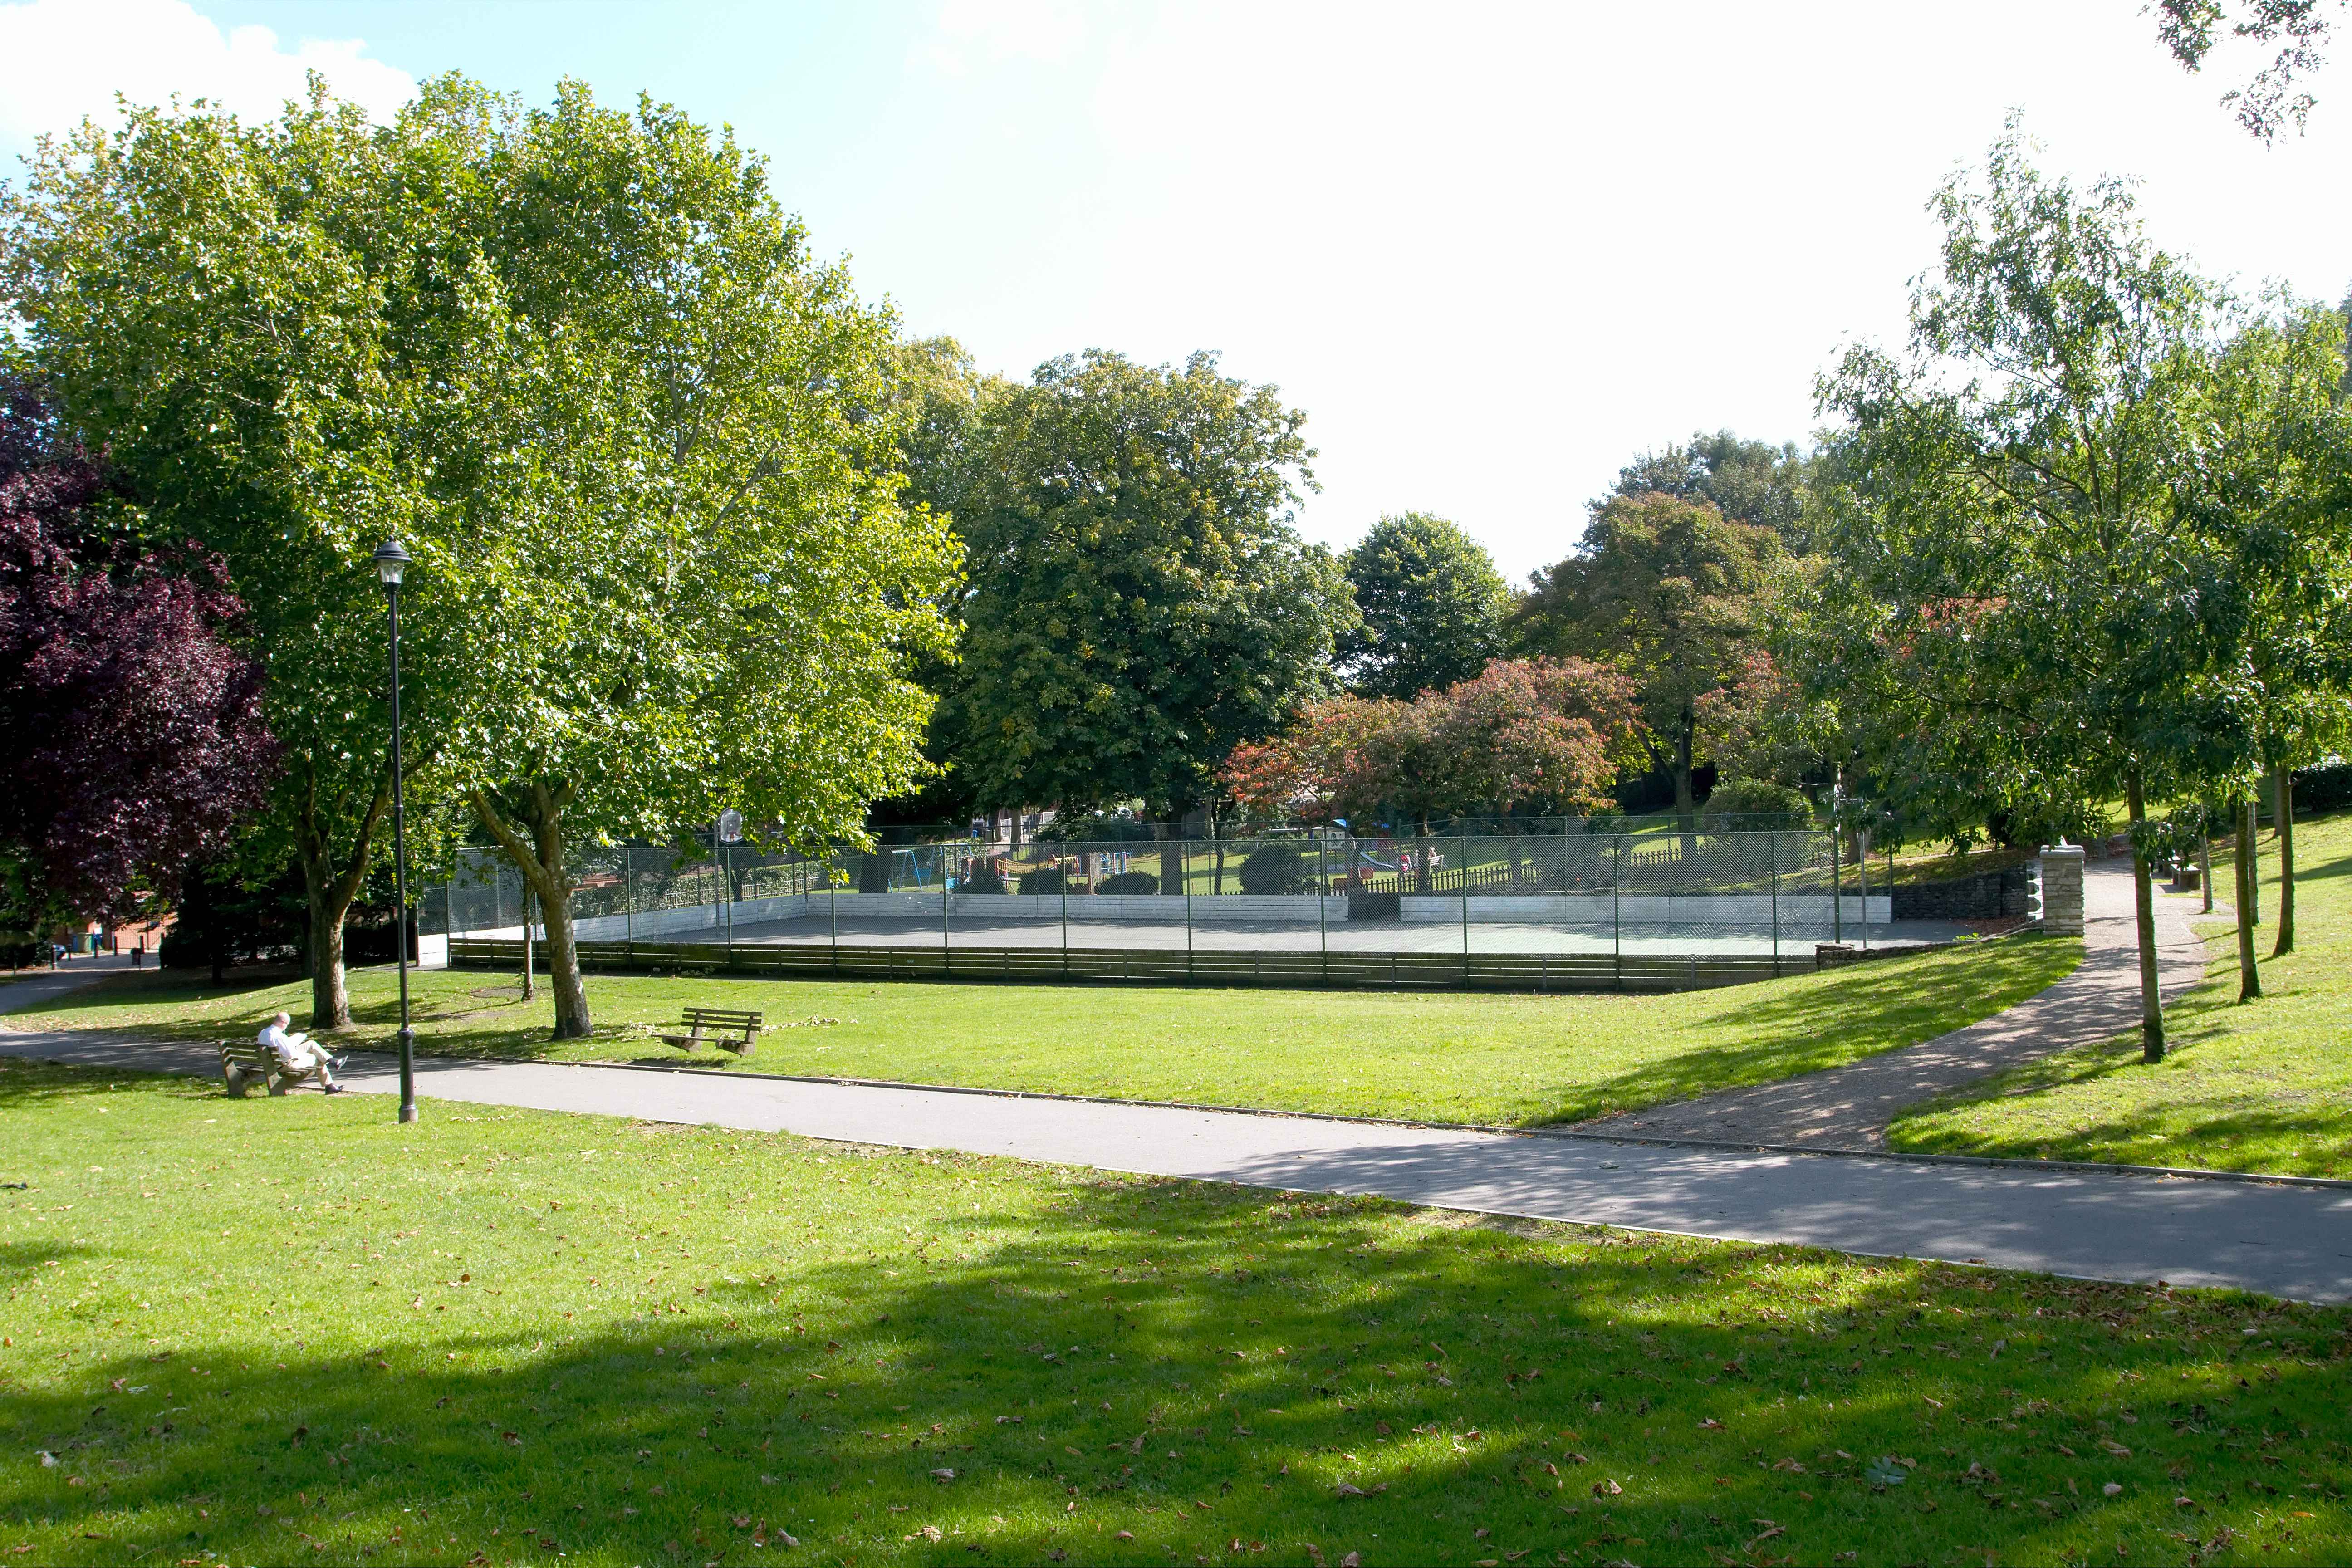 Municipal Gardens open grassy area looking towards ball court